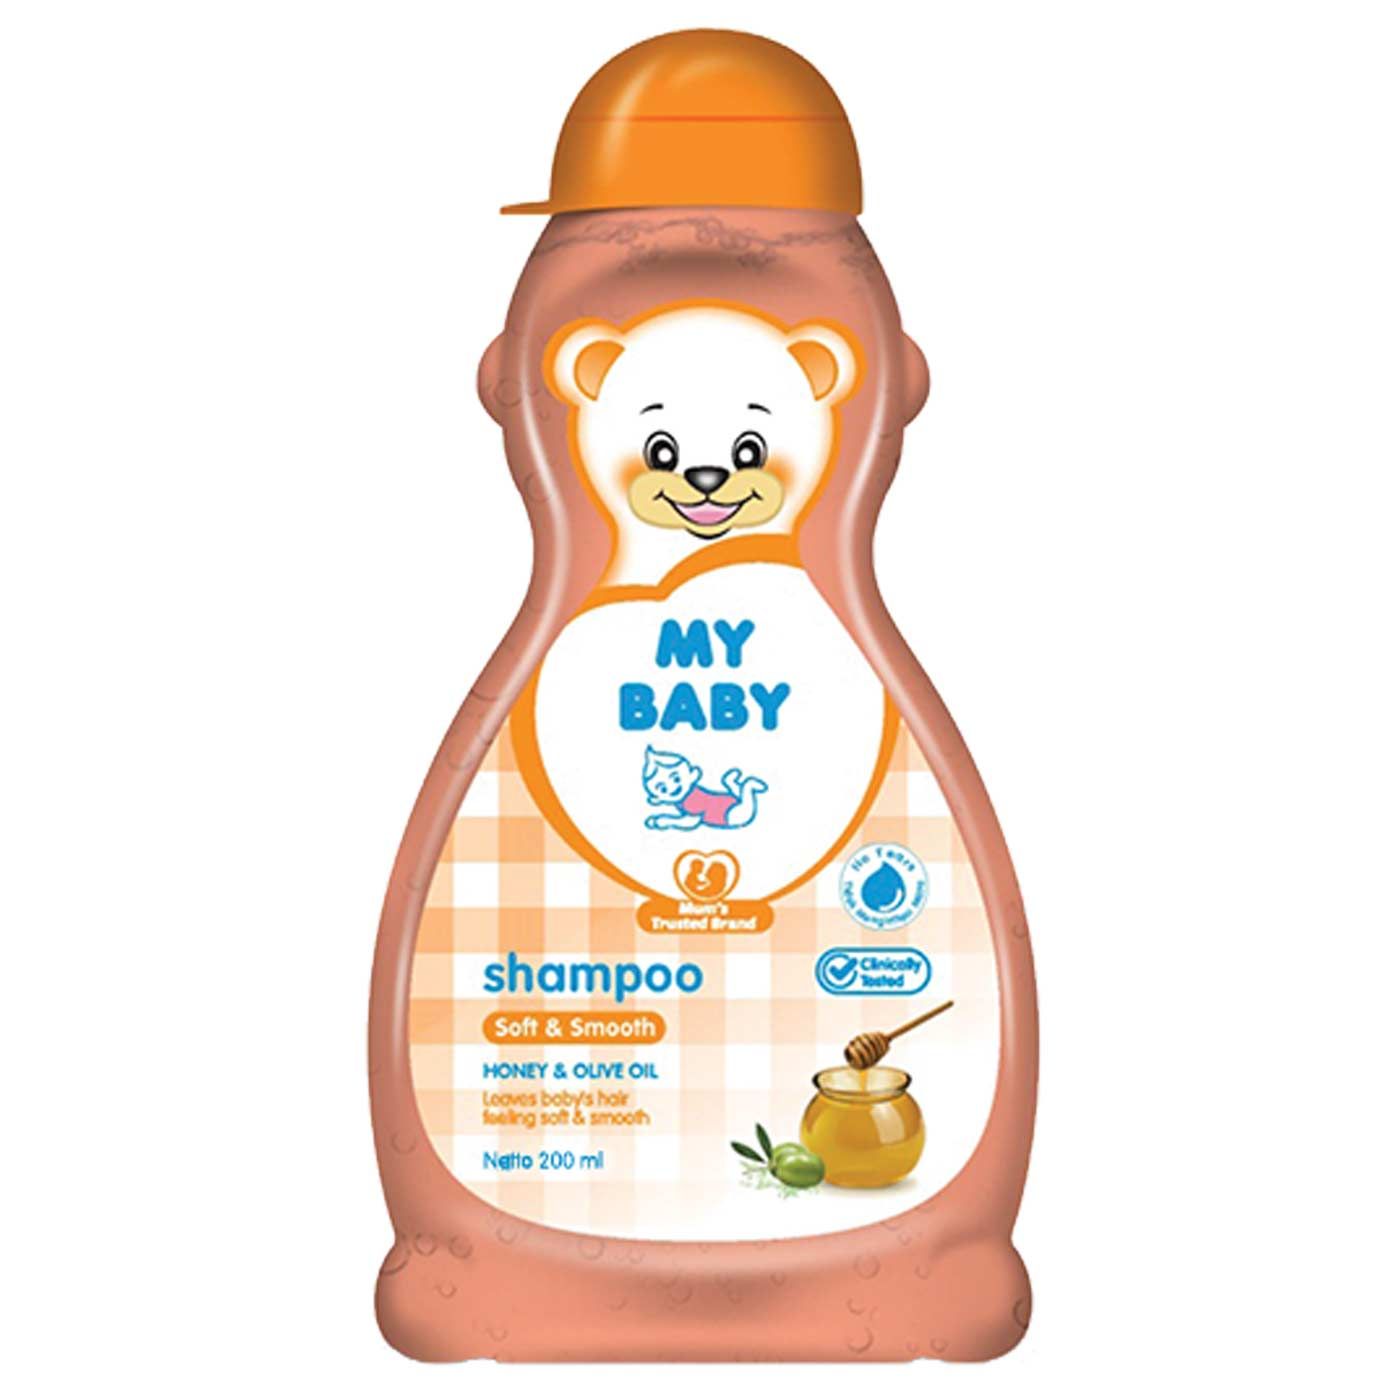 My Baby Shampoo Soft & Smooth 200ml - 2